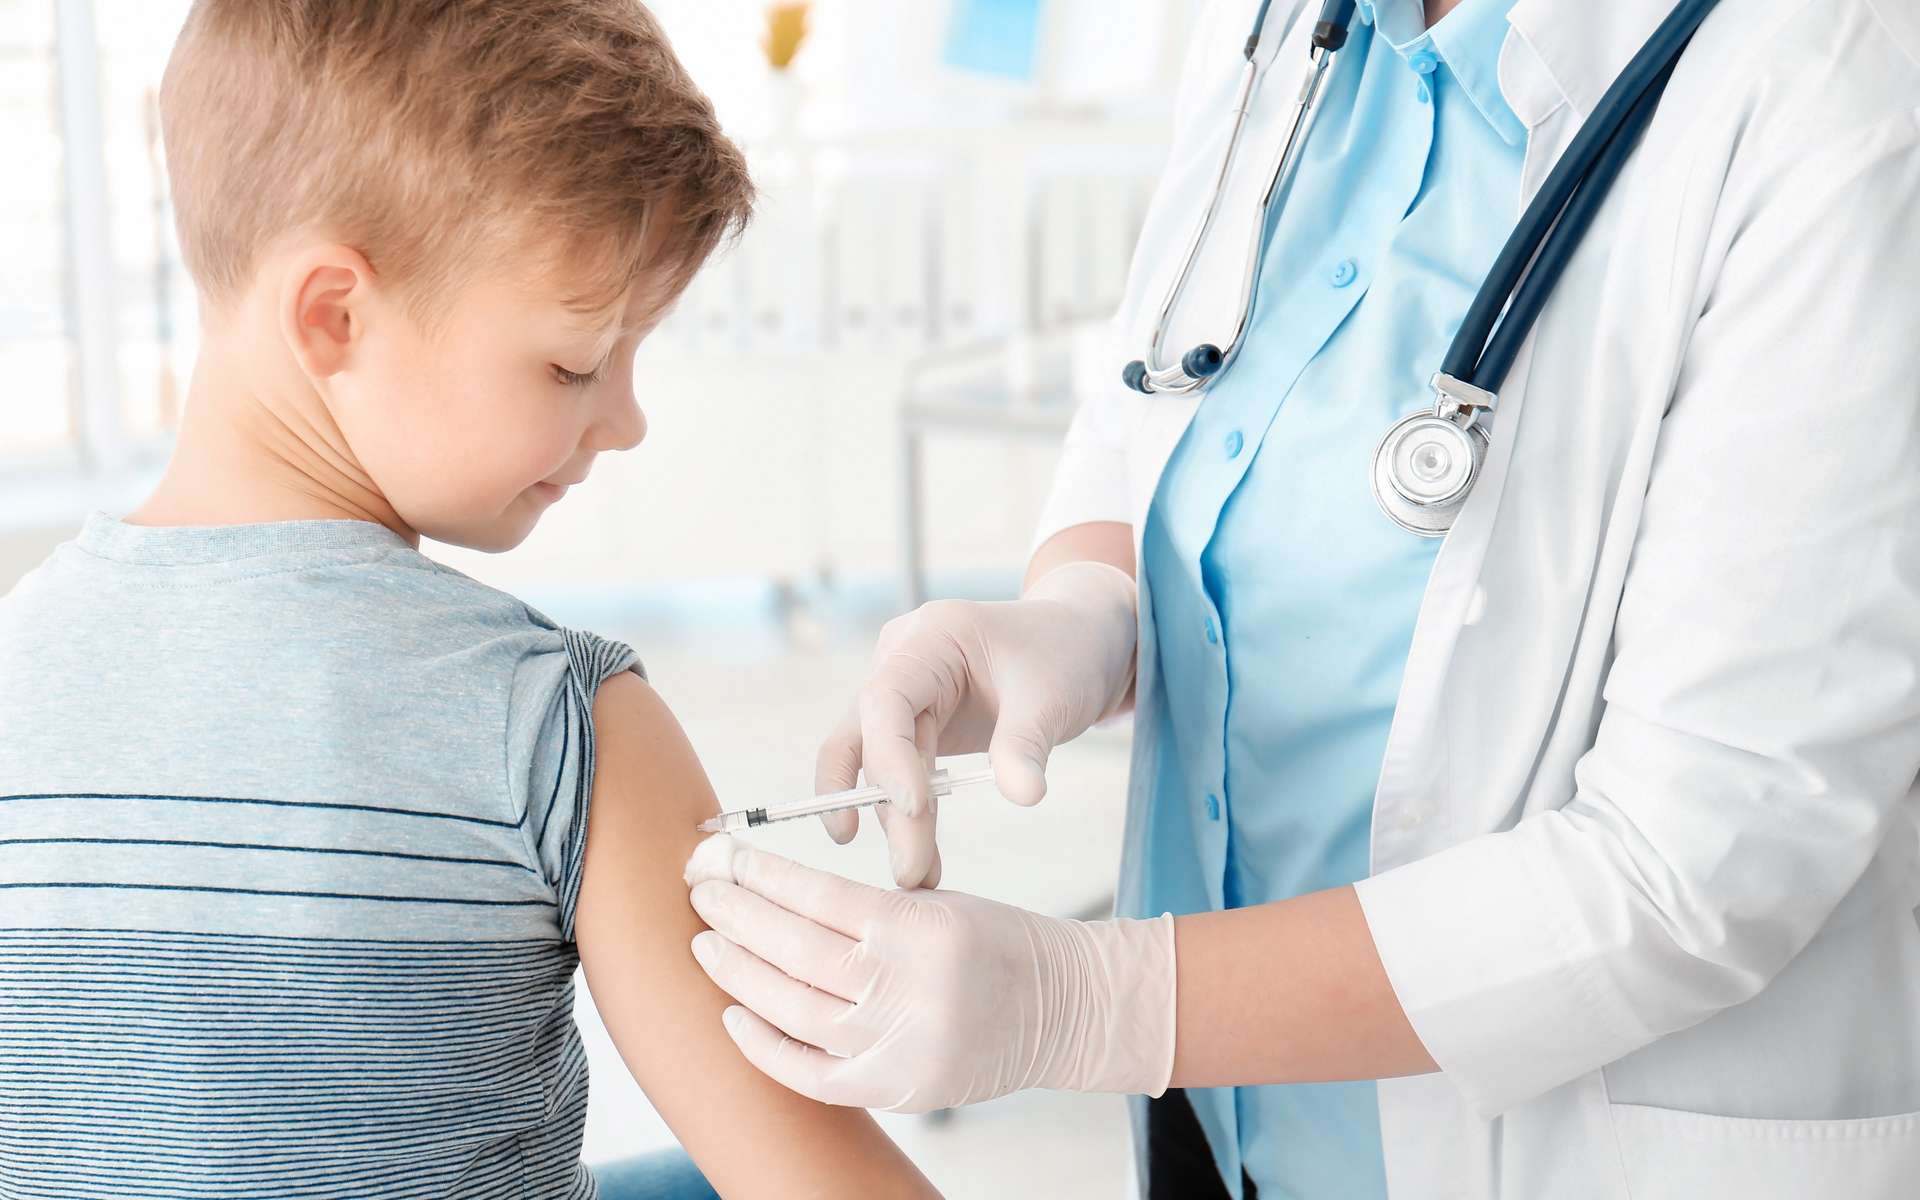 vaccin hpv homme age condilom baneocin